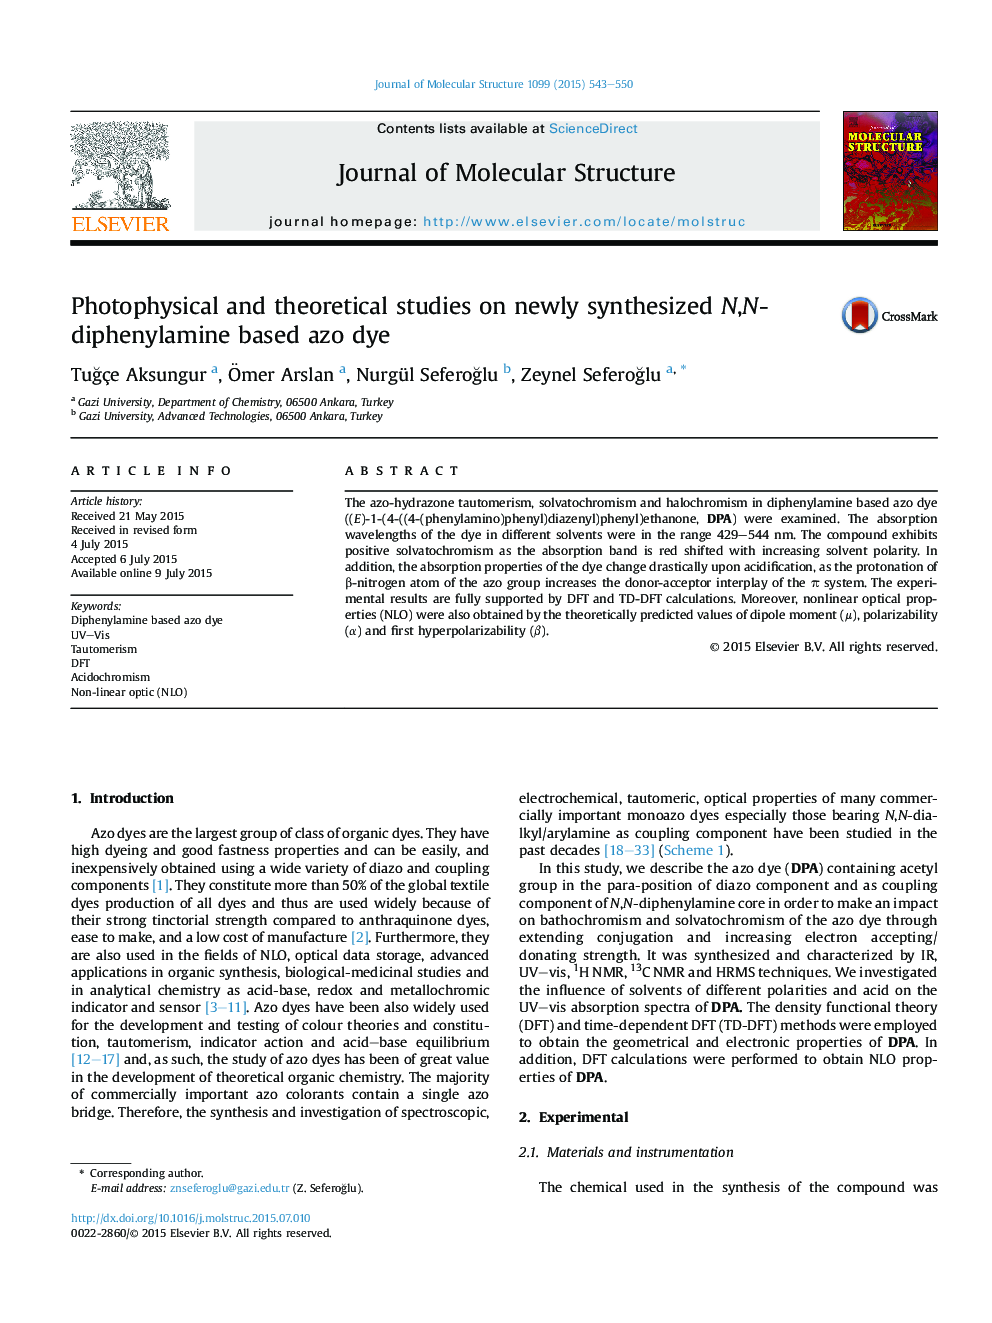 Photophysical and theoretical studies on newly synthesized N,N-diphenylamine based azo dye